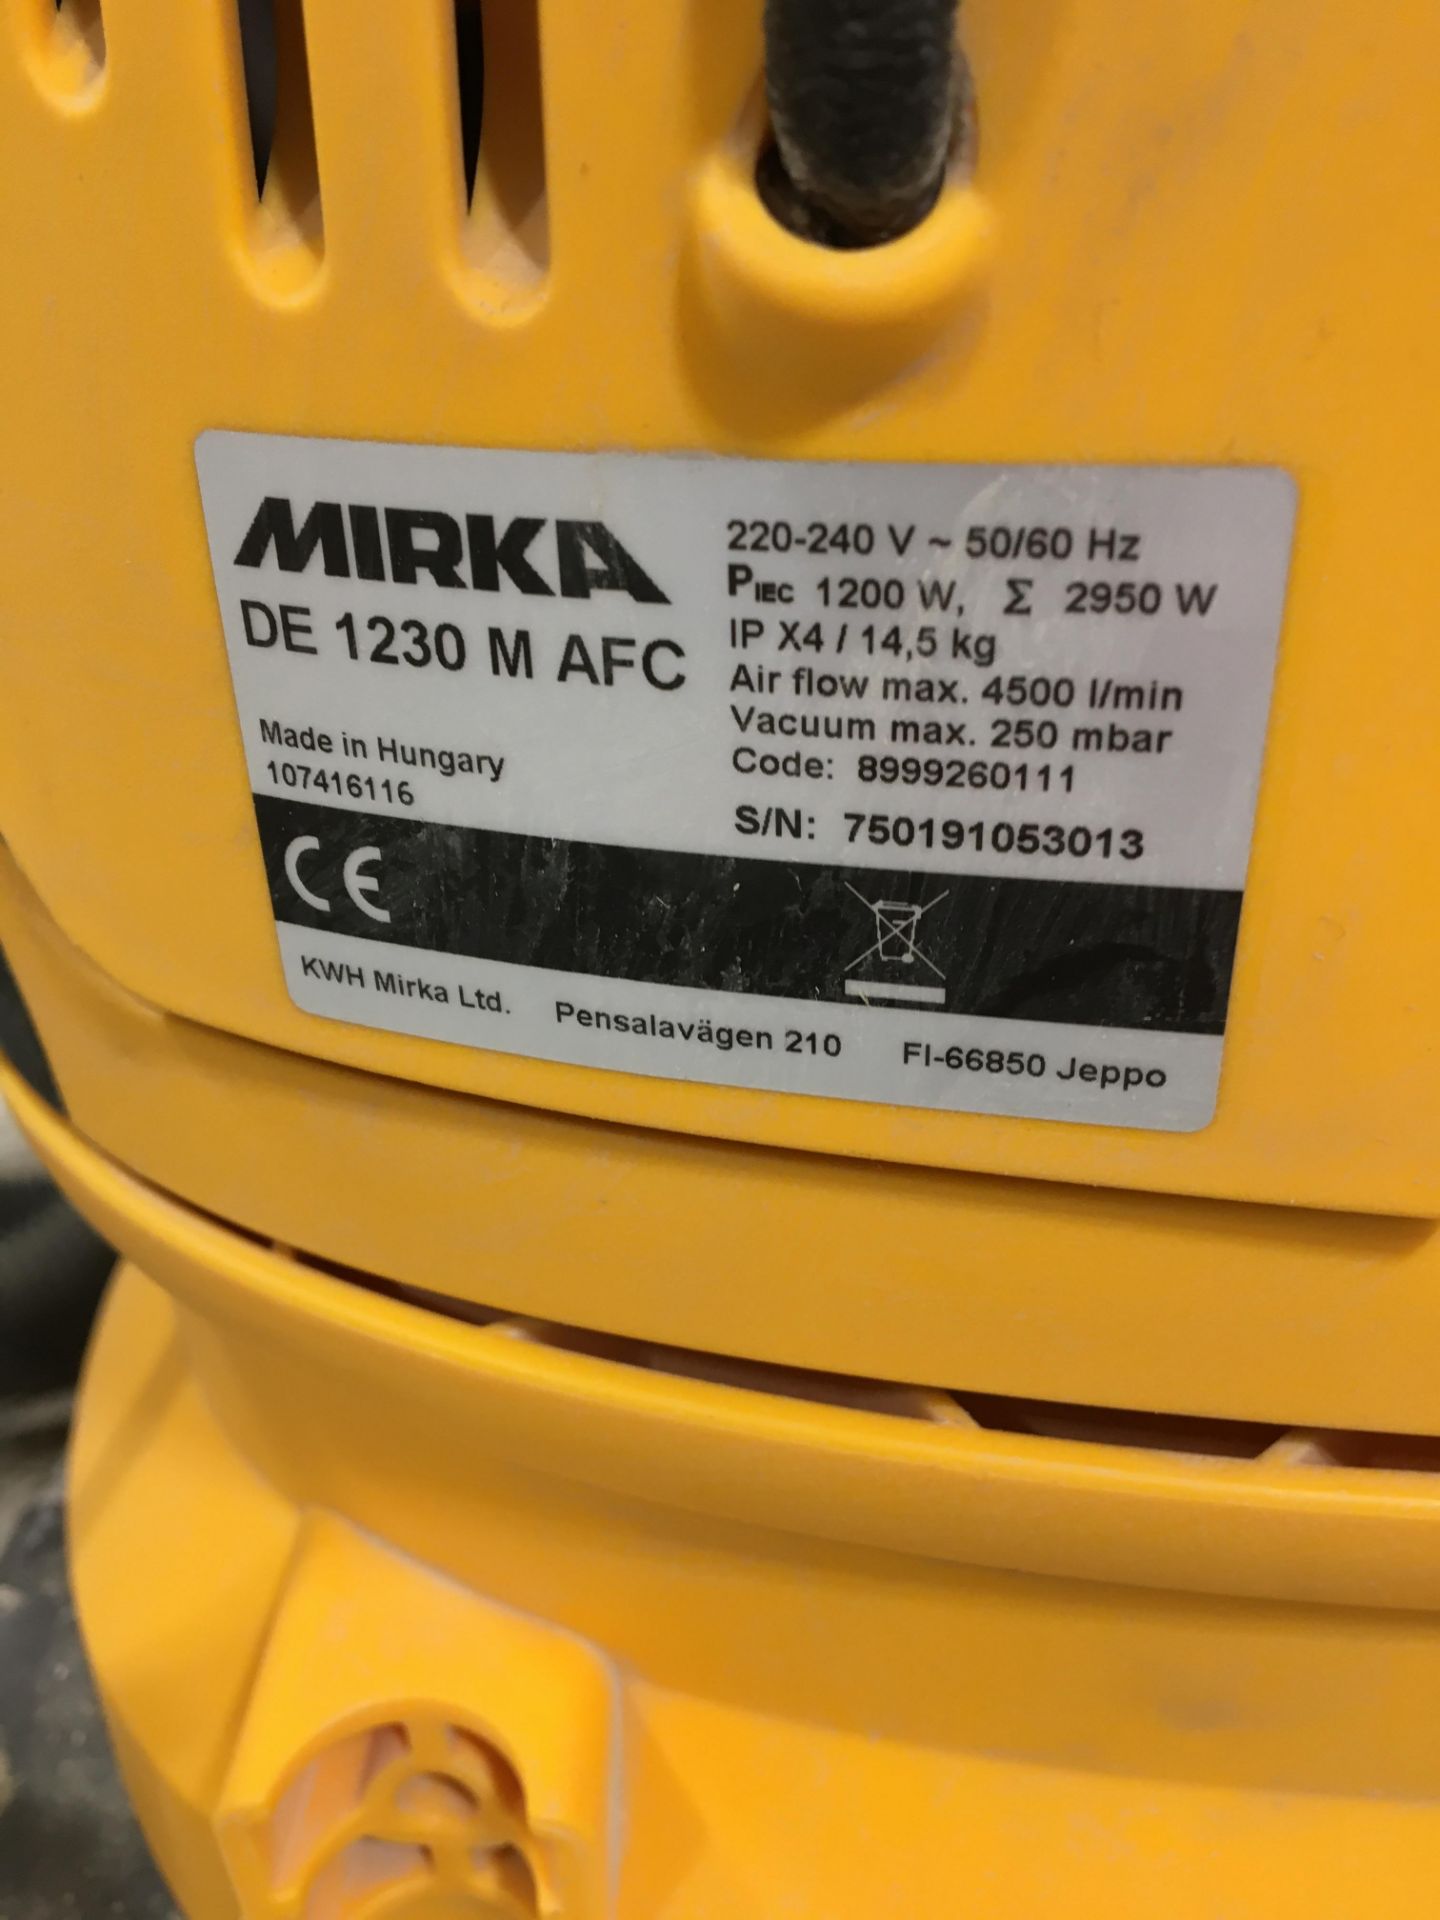 Mirka DE 1230 M AFC mobile dust extraction unit, Serial No. 750191053013 with Mirka Deros 650 - Image 2 of 3